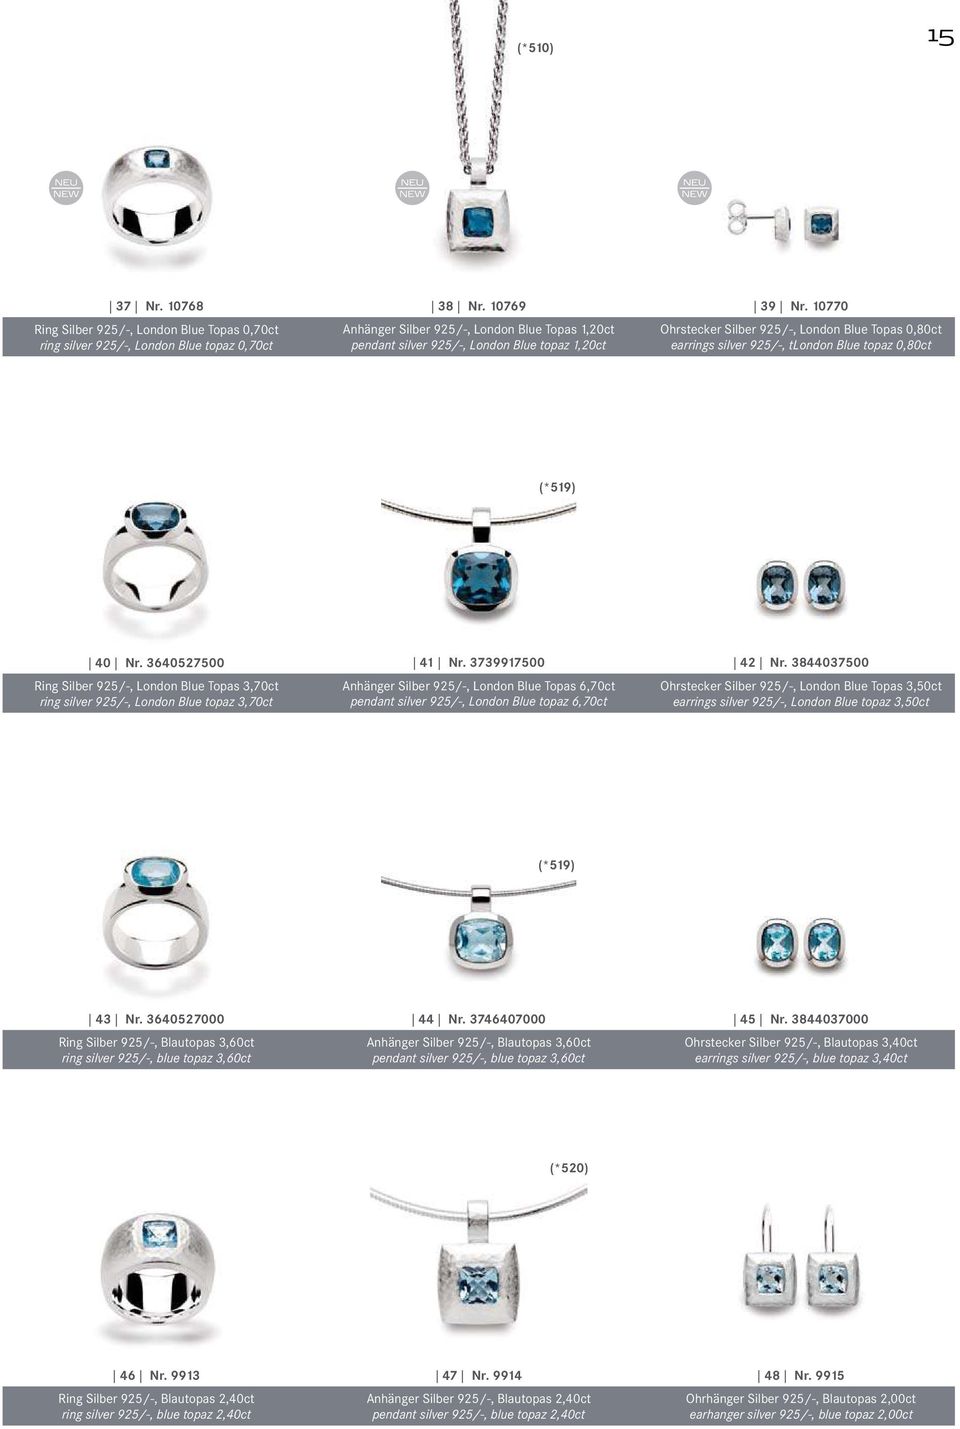 10770 Ohrstecker Silber 925/-, London Blue Topas 0,80ct earrings silver 925/-, tlondon Blue topaz 0,80ct (*519) 40 Nr.